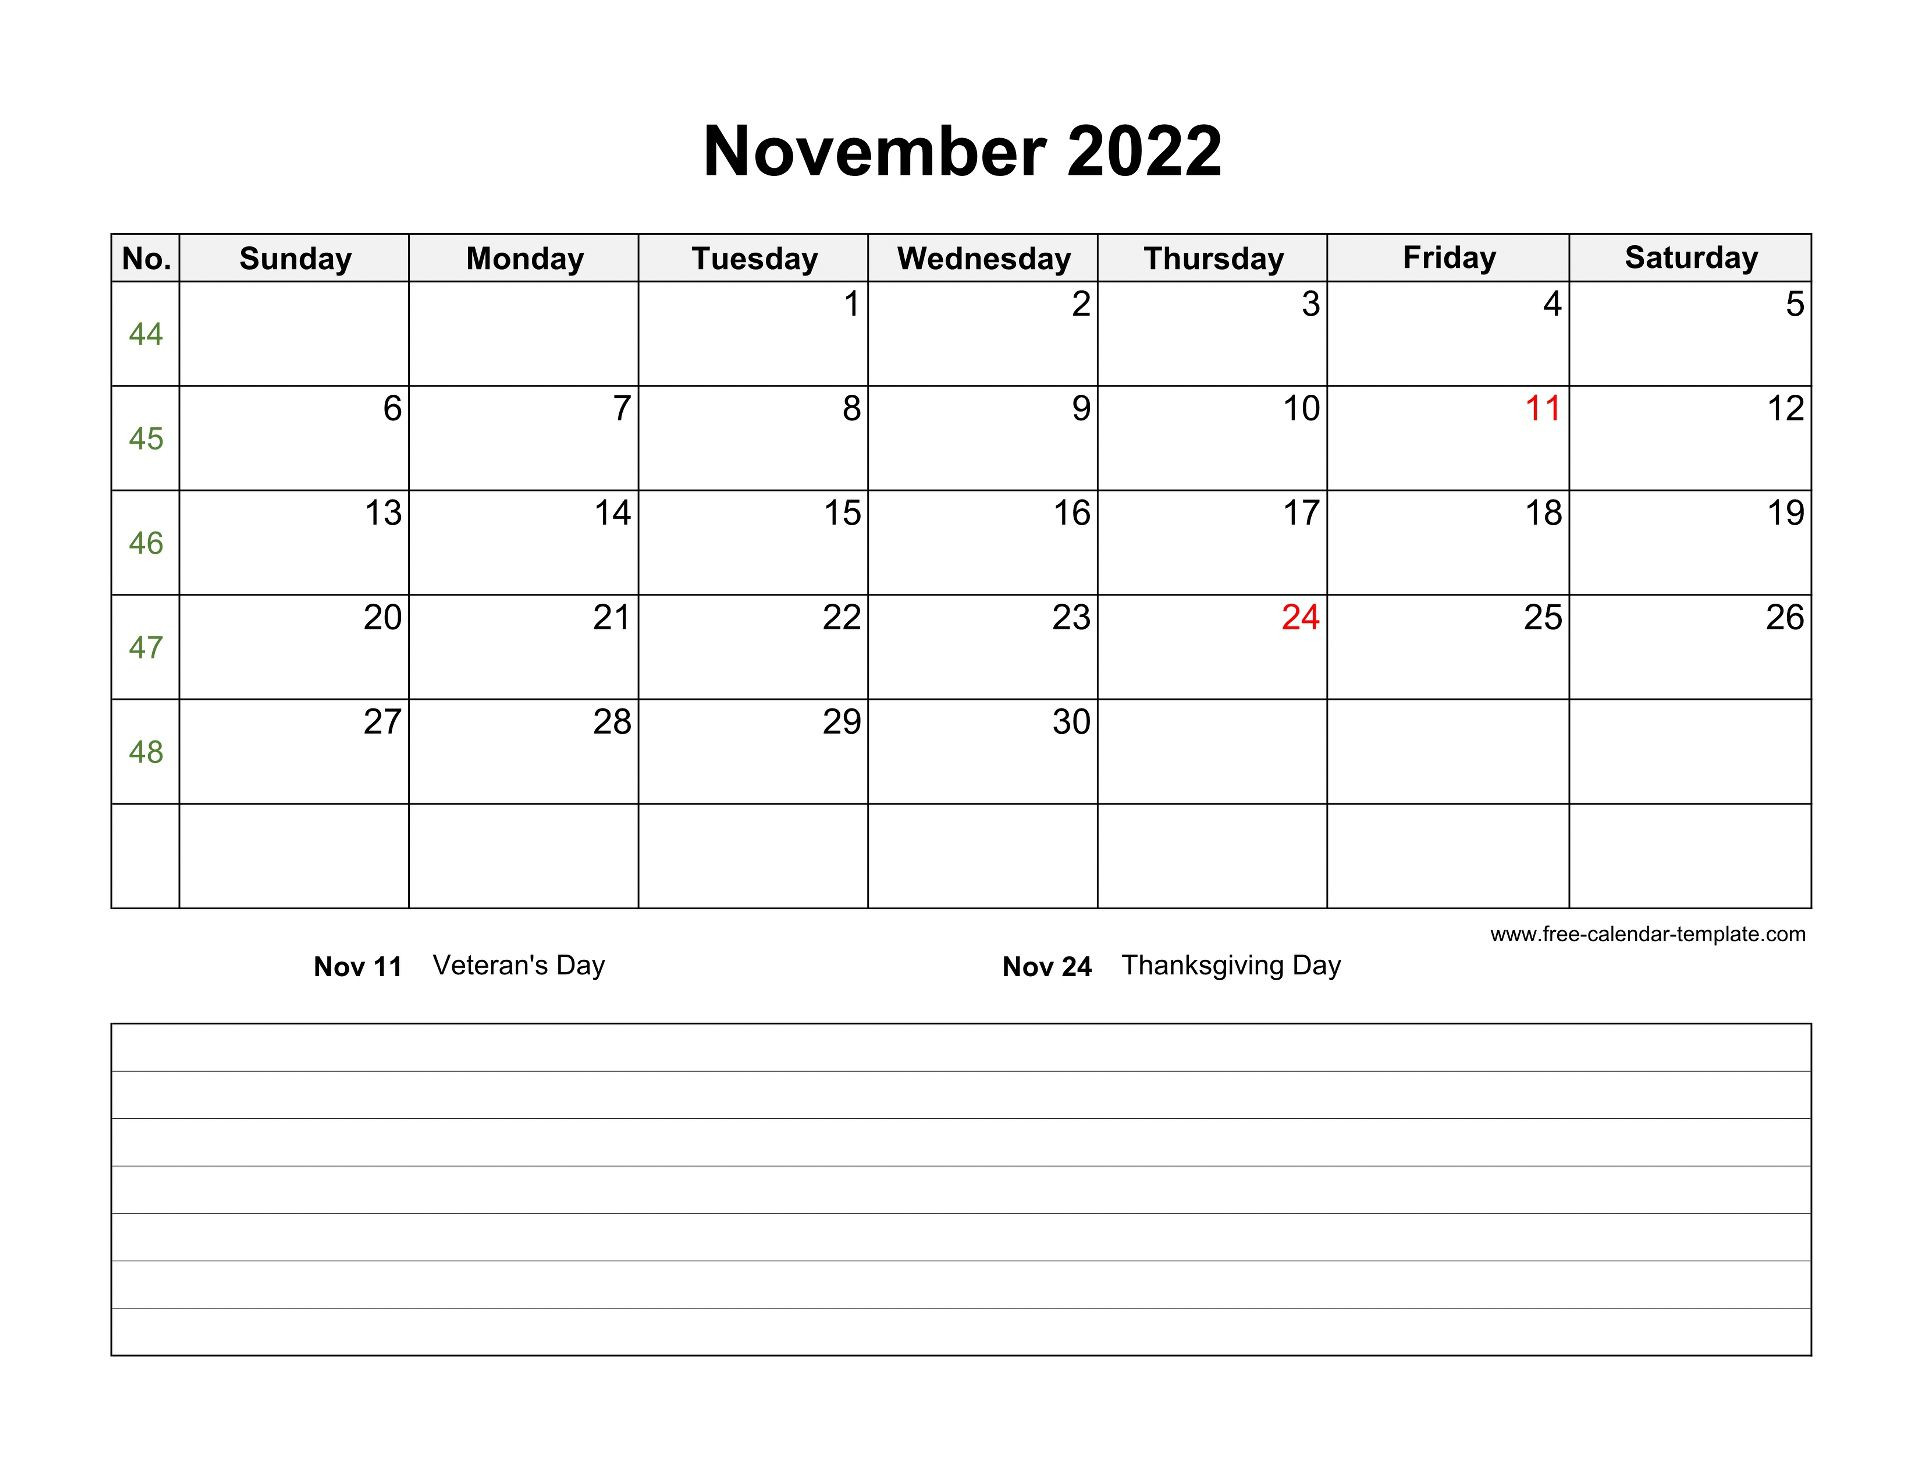 November 2022 Free Calendar Tempplate | Free-Calendar  Astronomy Picture Of The Day November 30 2022